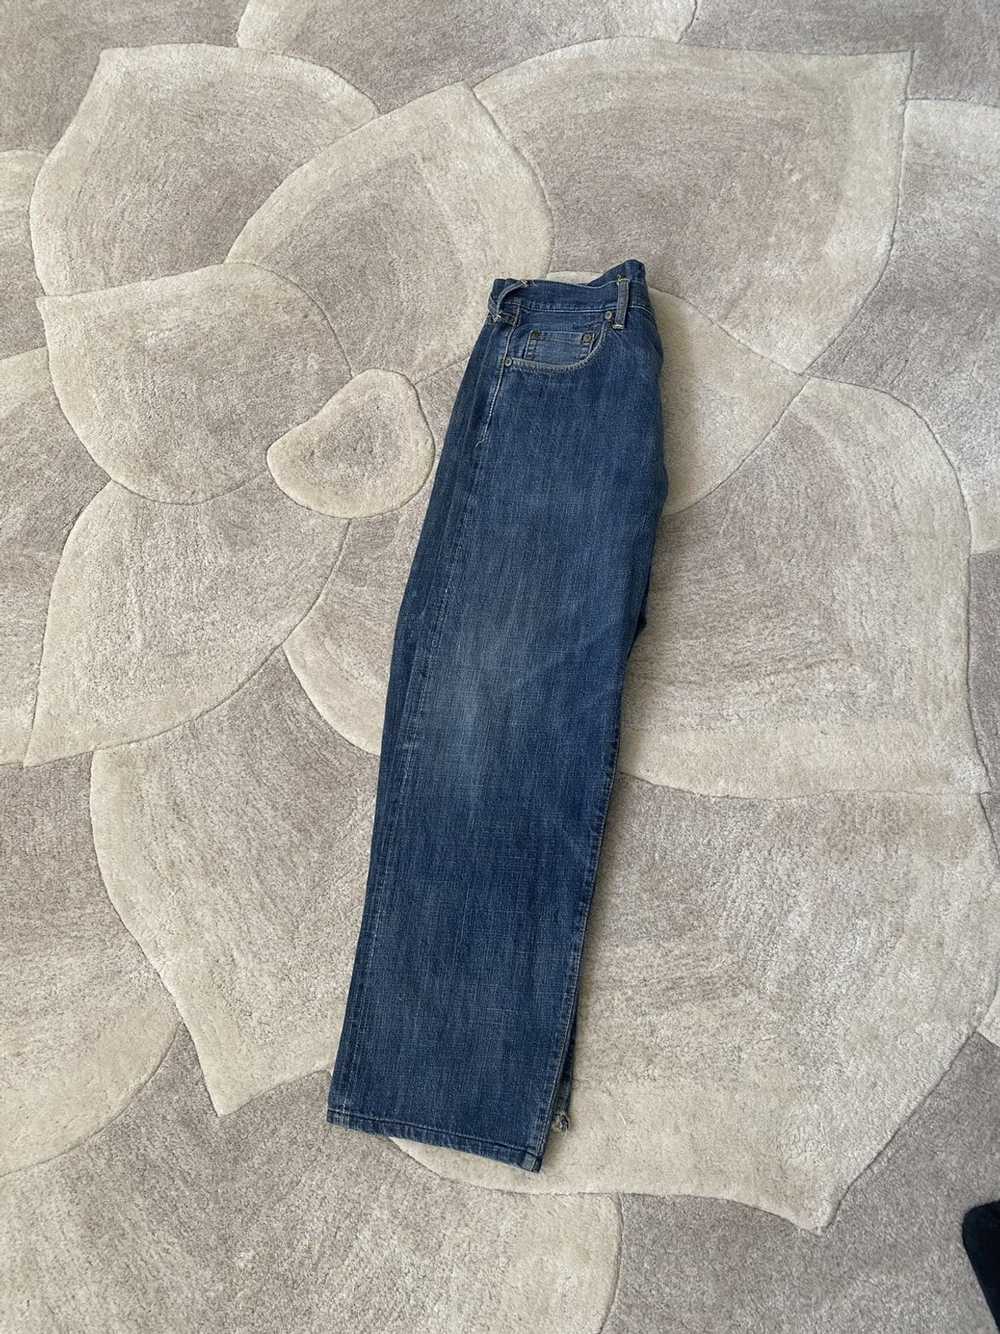 Evisu Evisu full logo distressed jeans - image 5